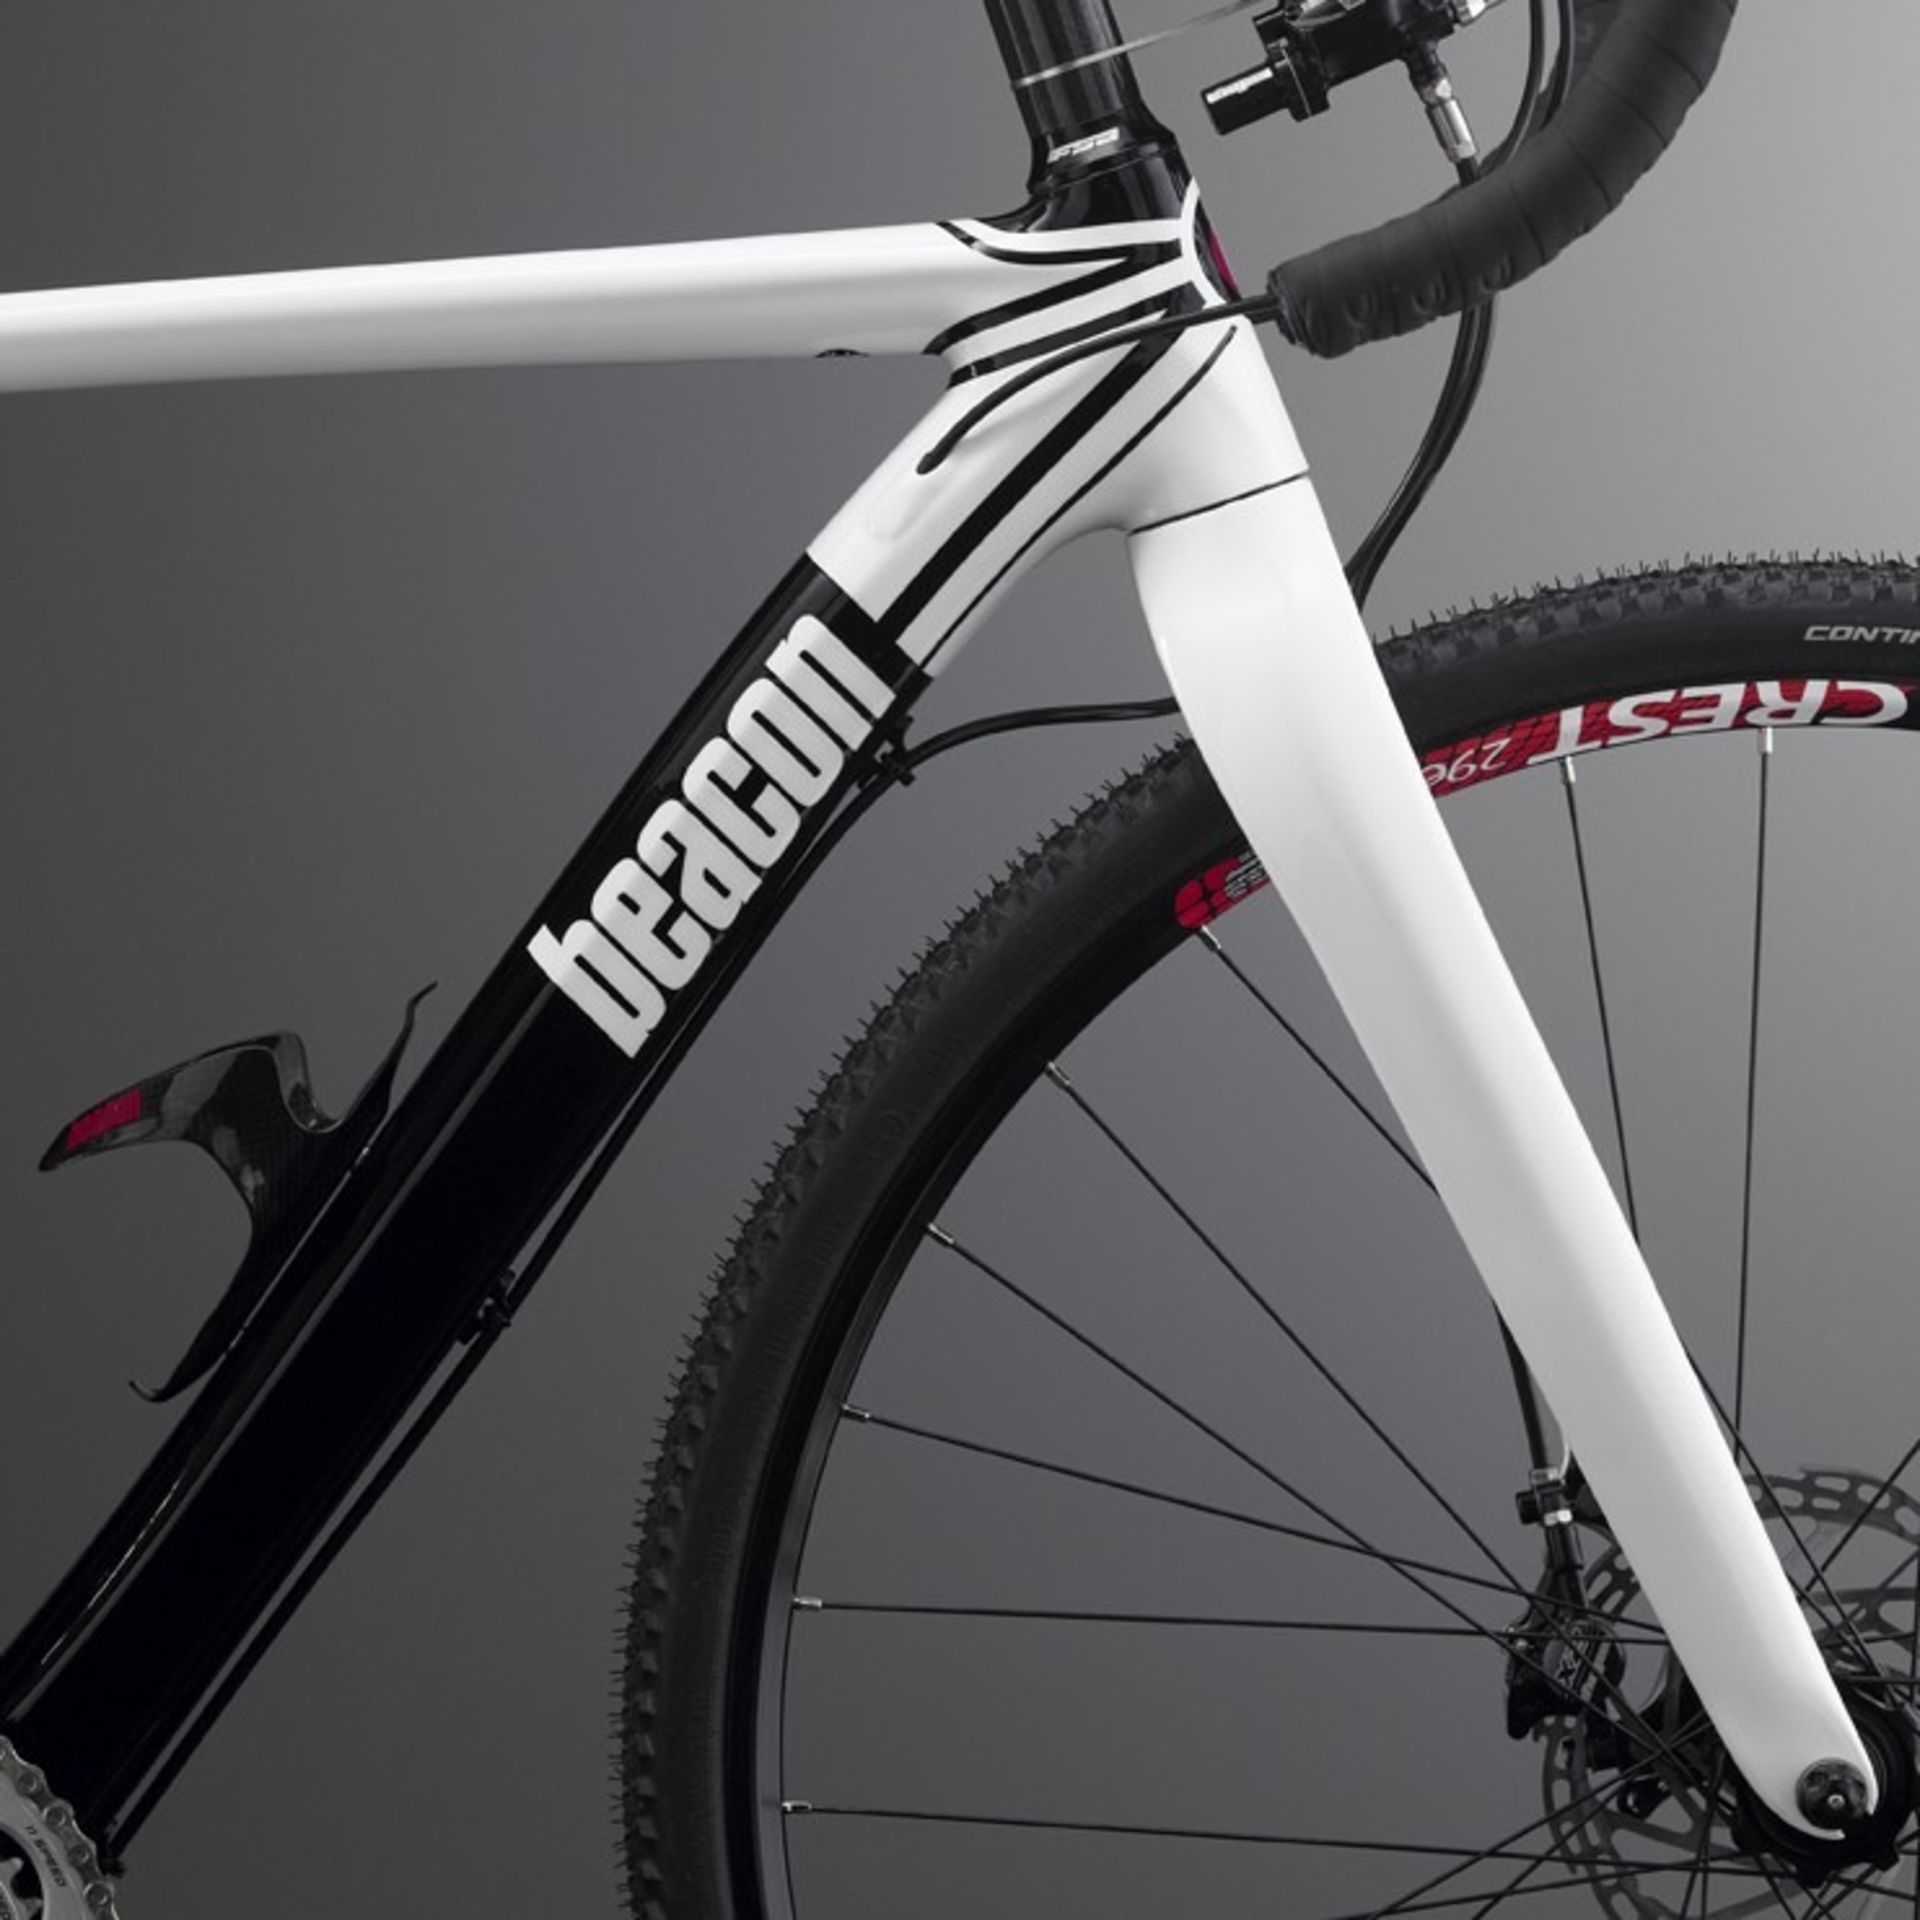 1 x Beacon Model BF-45, Size 520, Carbon Fibre Bike Frame in Black & White. - Image 3 of 3